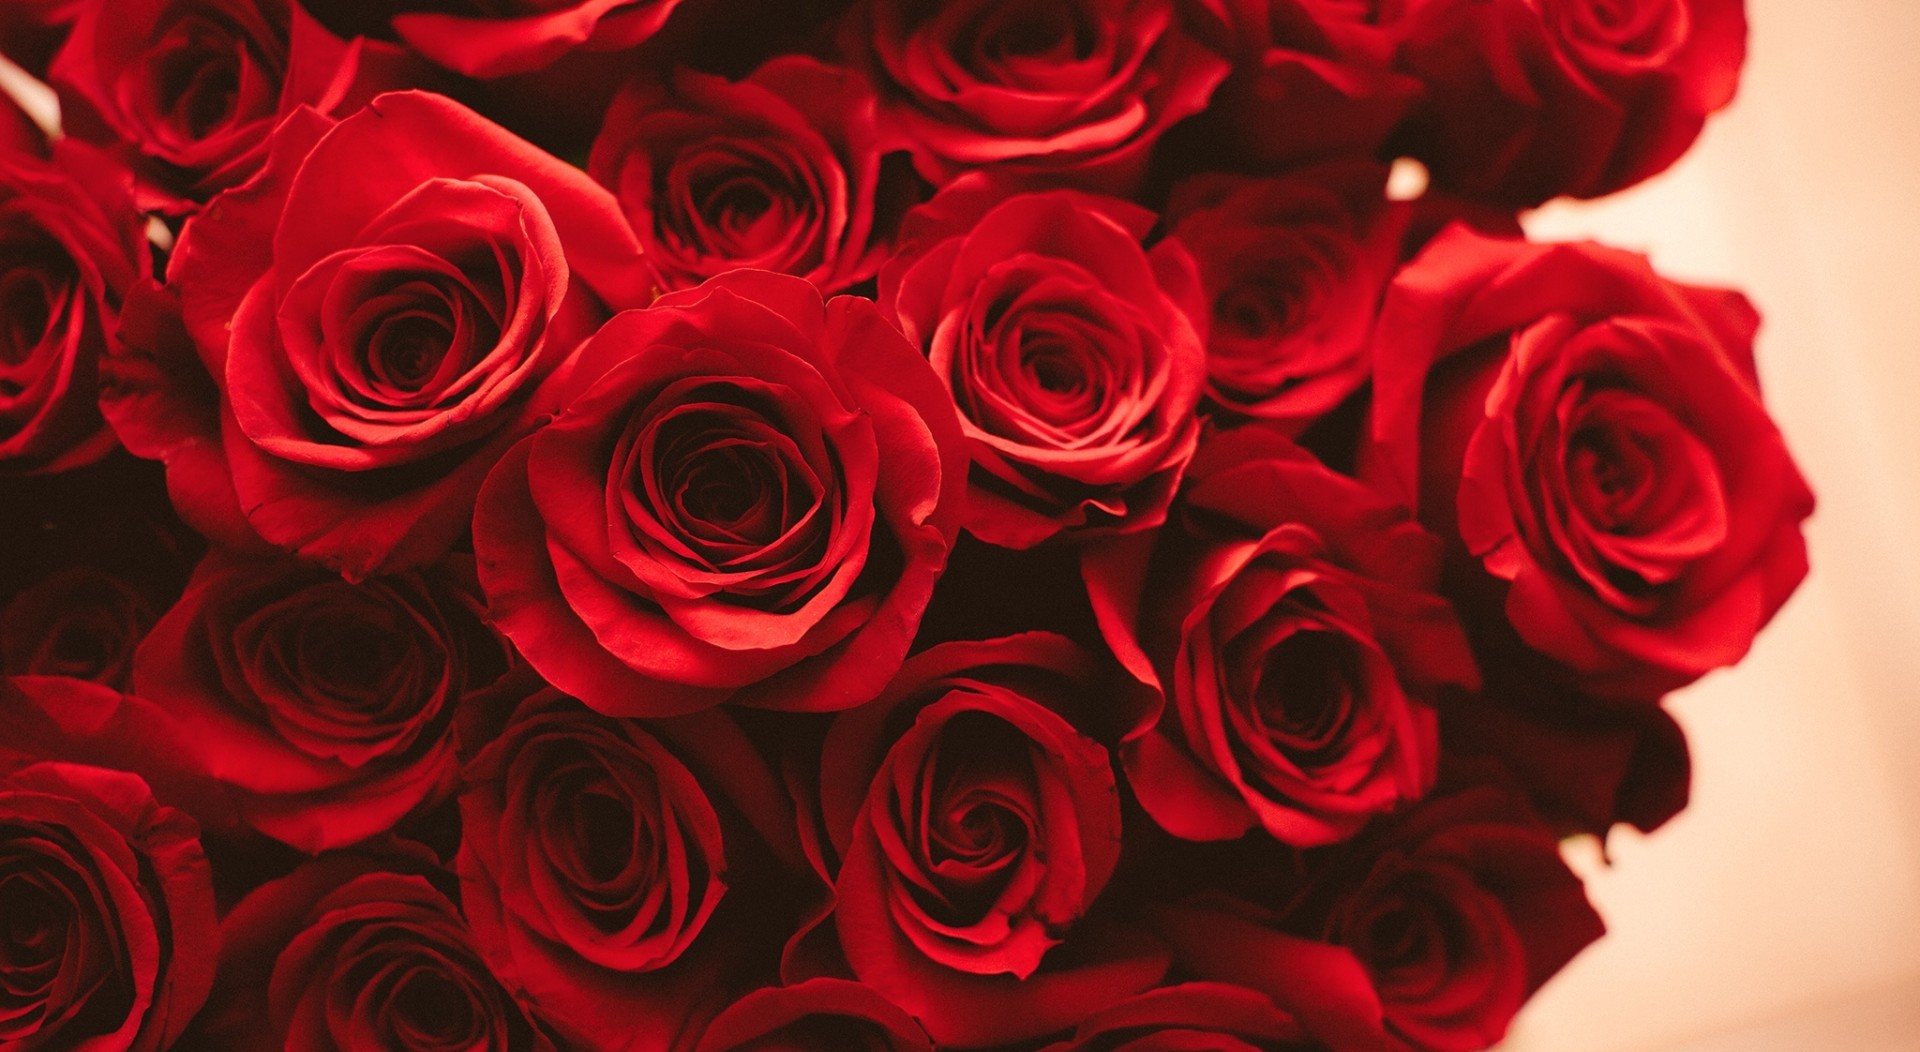 Roses - Flowers Photo (34758621) - Fanpop